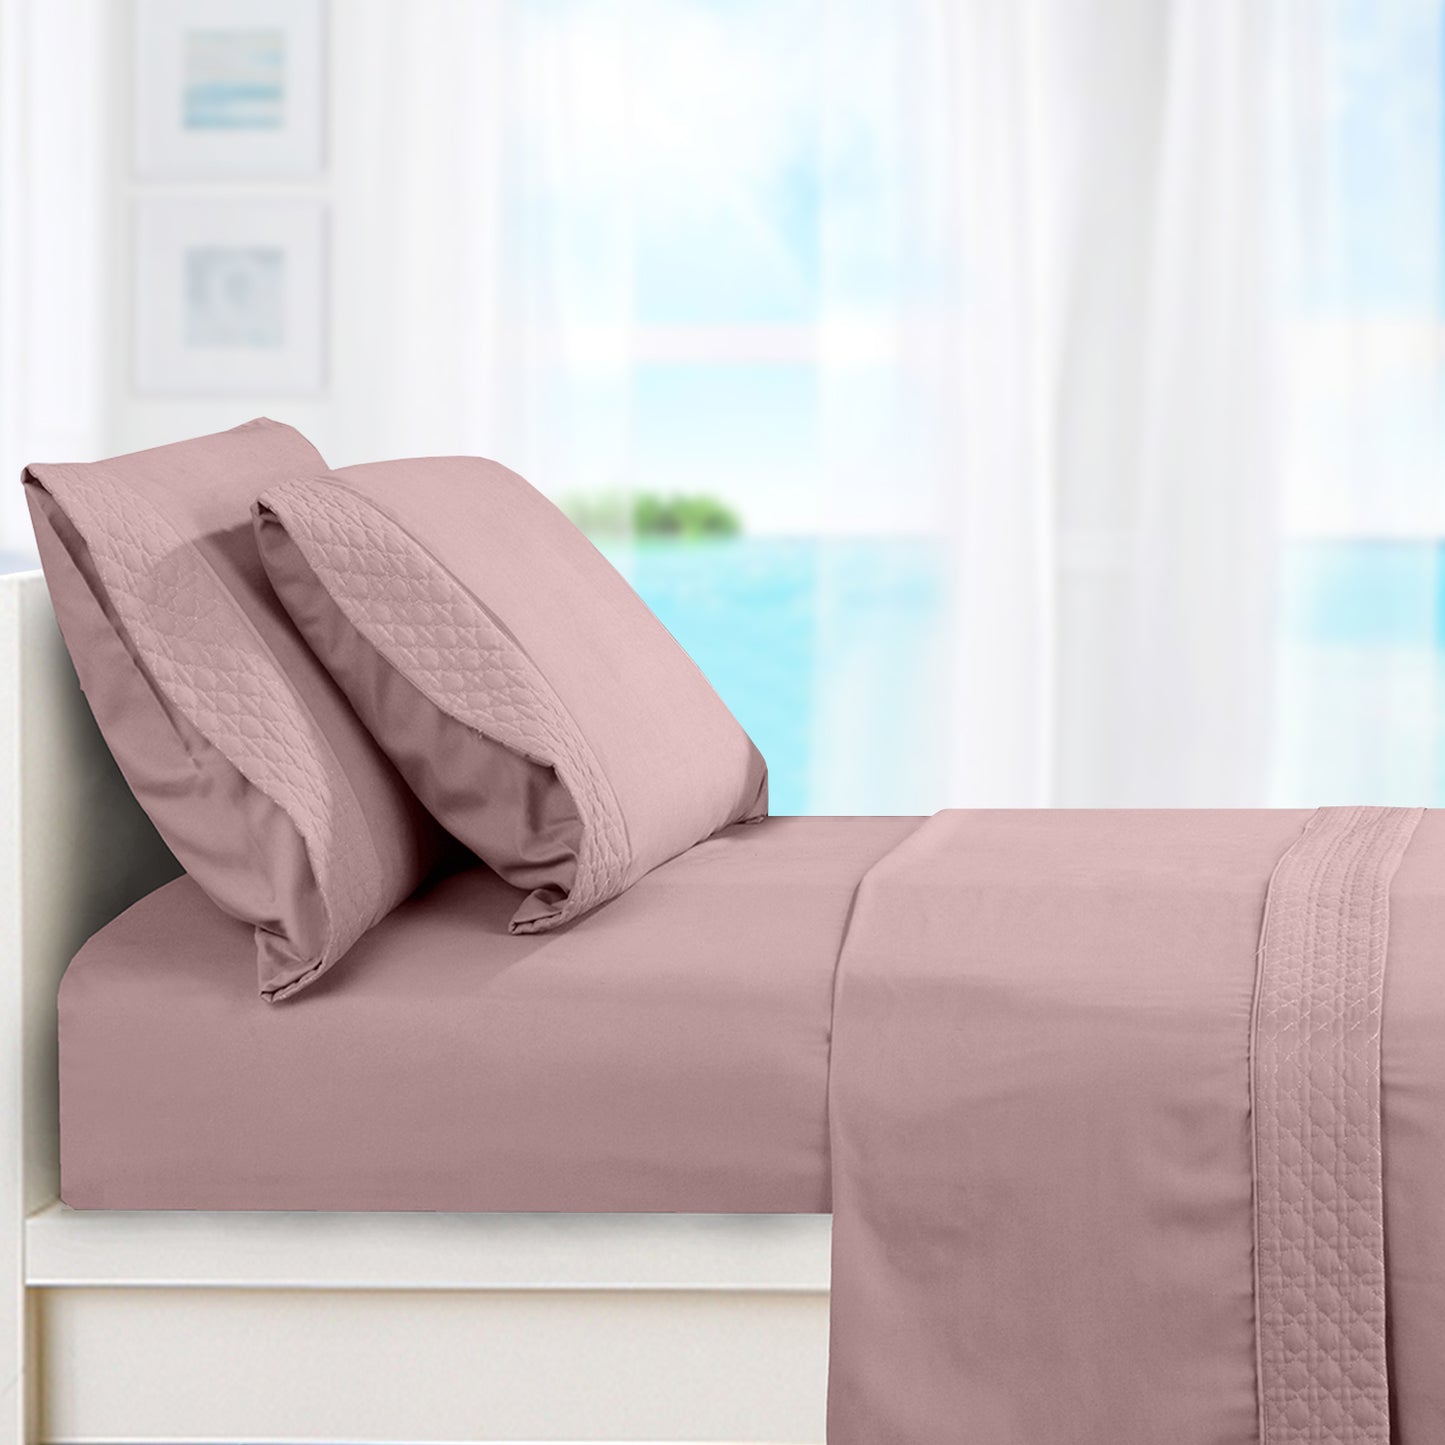 Elegant Comfort Quilted 4-Piece Sheet Set, Premium Hotel Quality